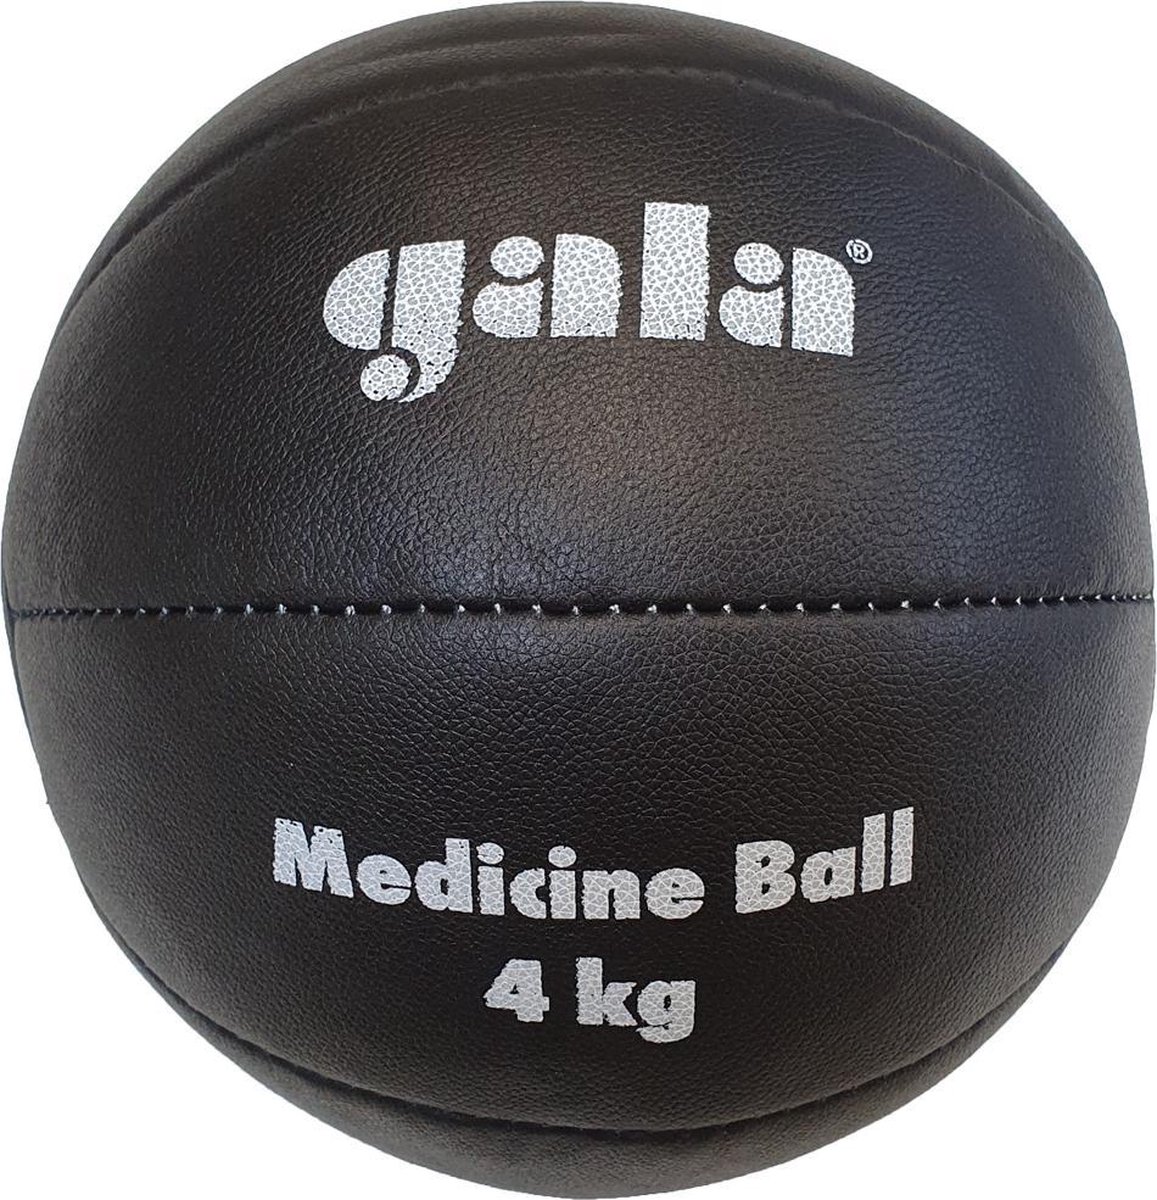 Gala Medicine Ball - Medicijn bal - 4 kg - Zwart Leer